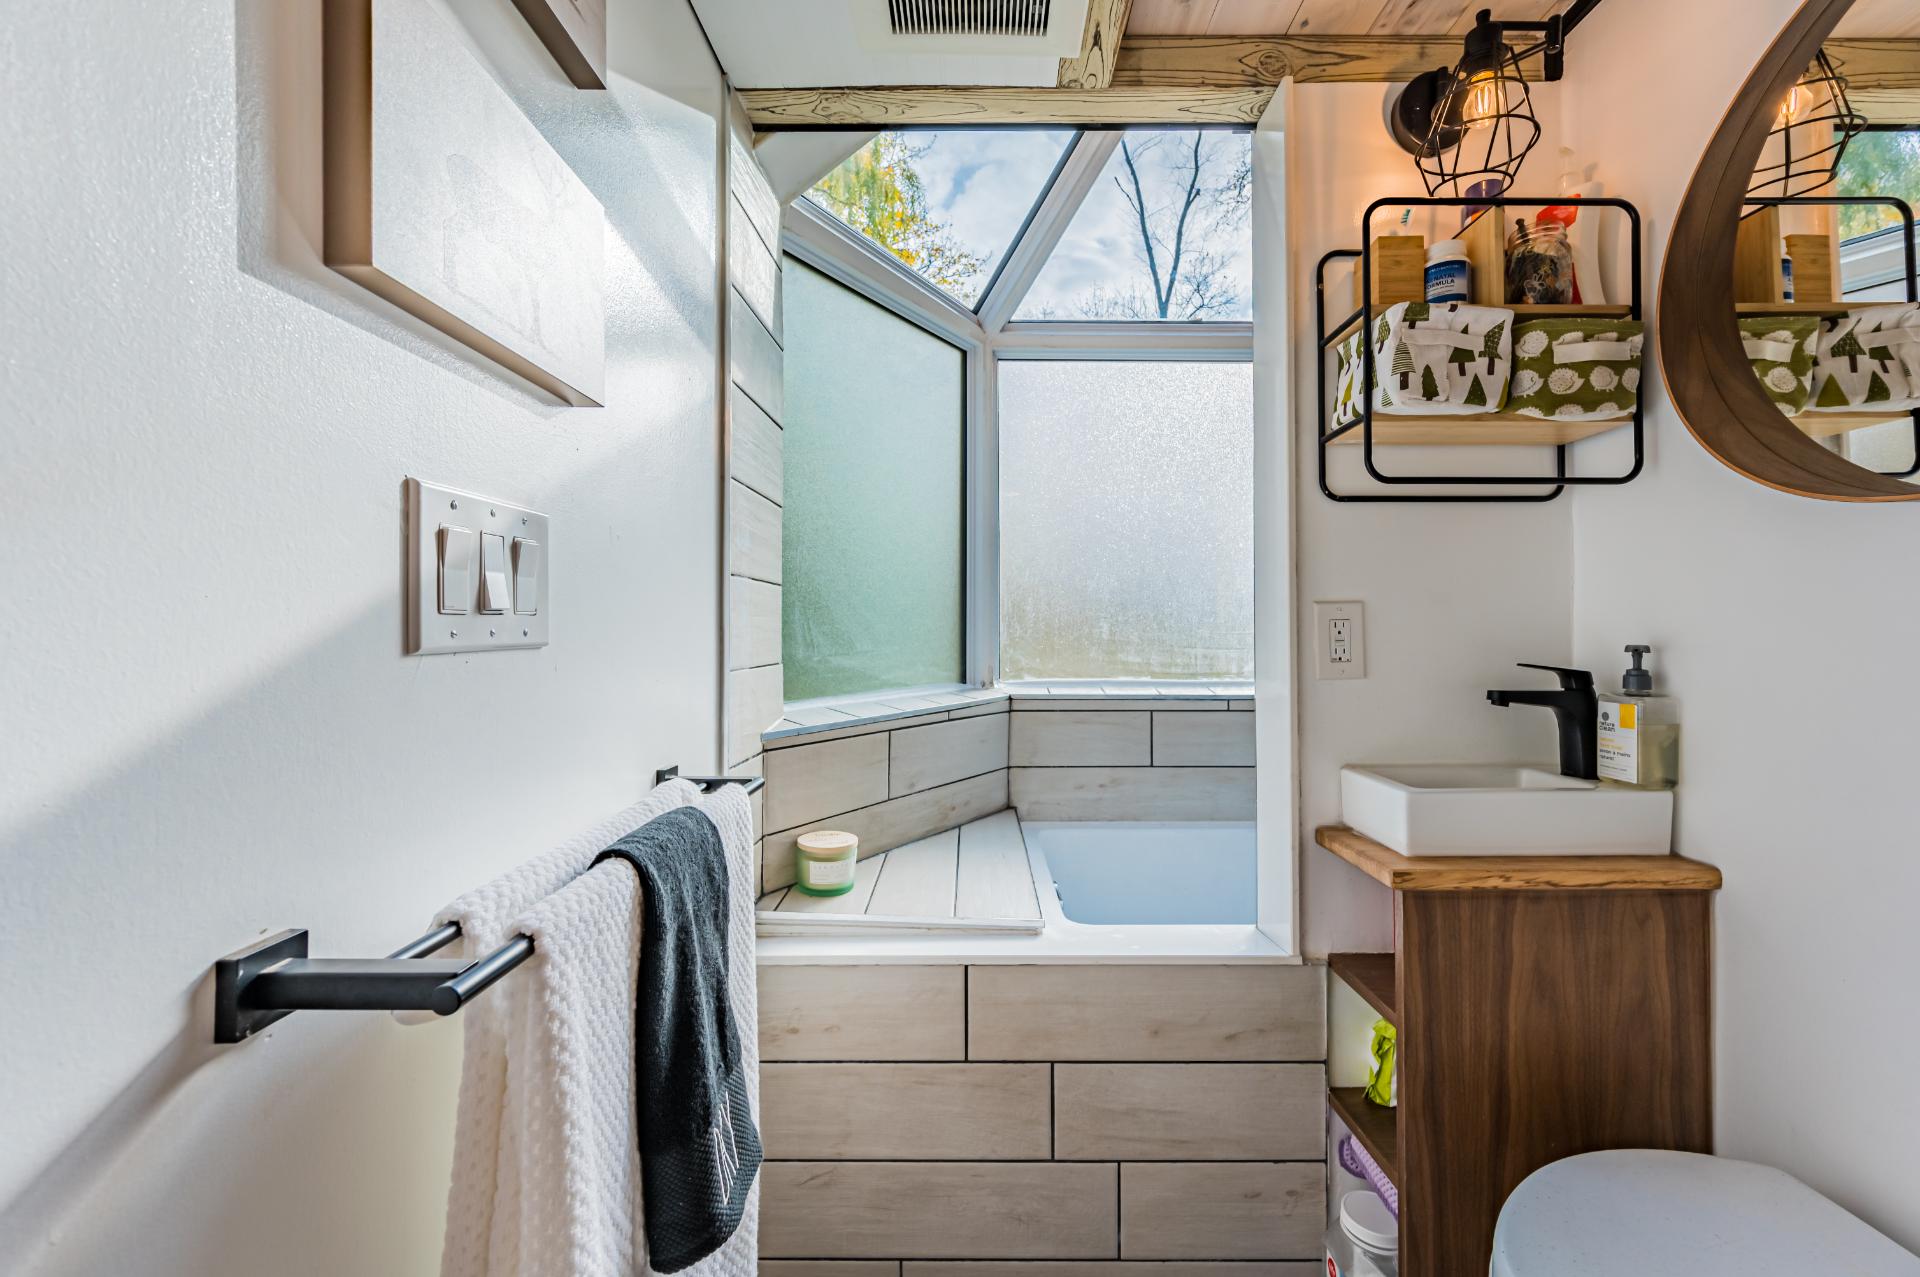 Shower Access - Domek by Acorn Tiny Homes